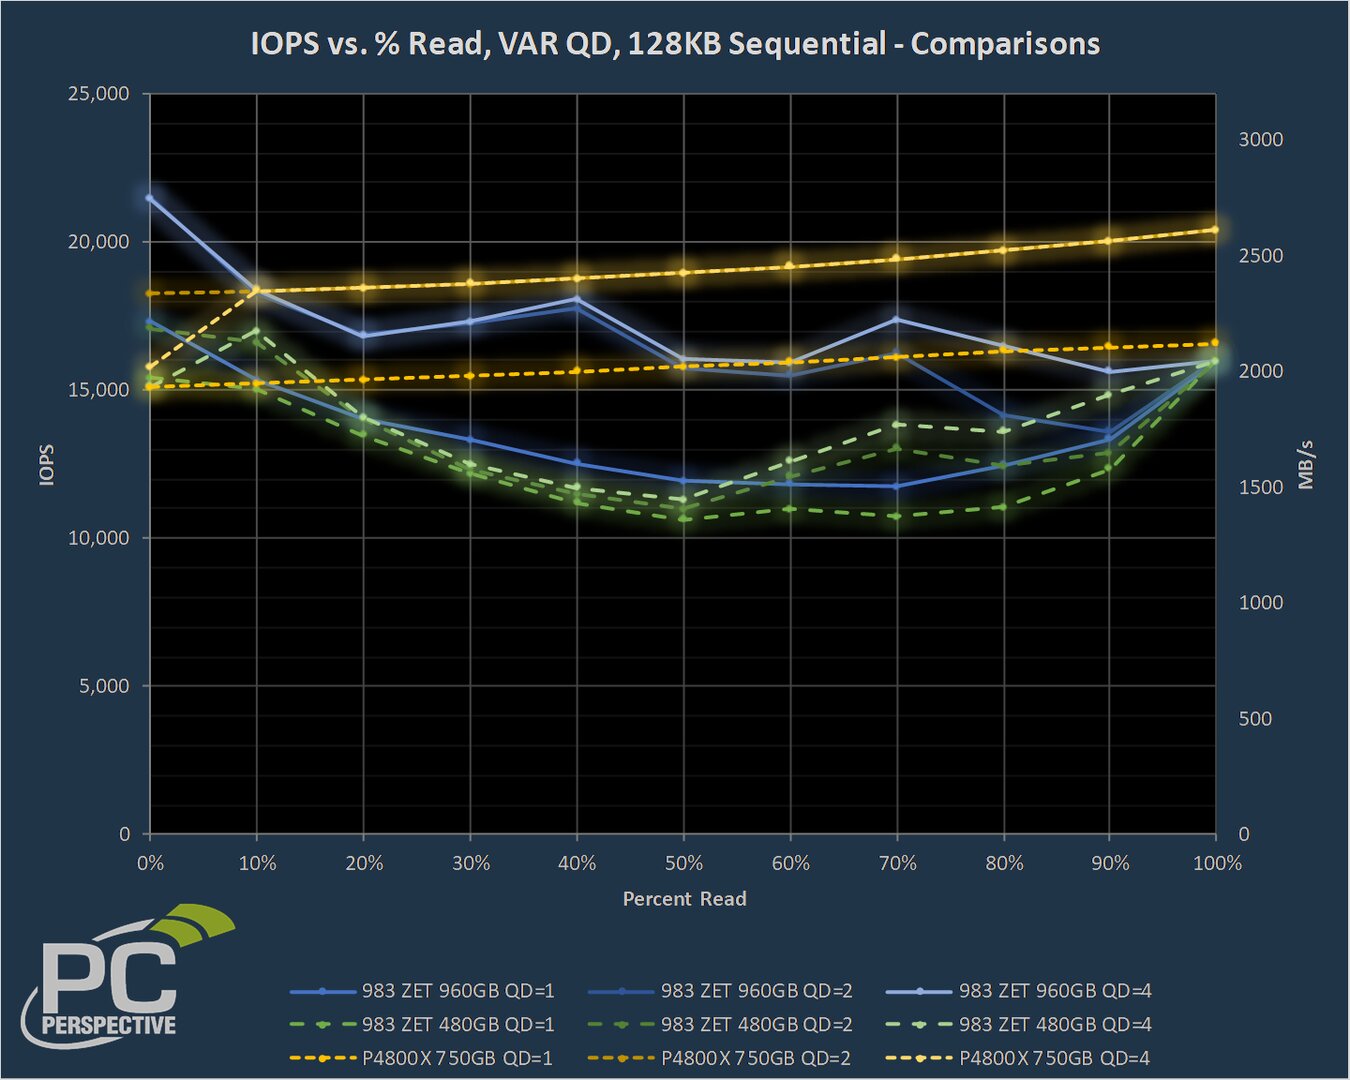 Samsung Z-SSD vs. Intel Optane (128K Sequential, IOPS vs. % Read)